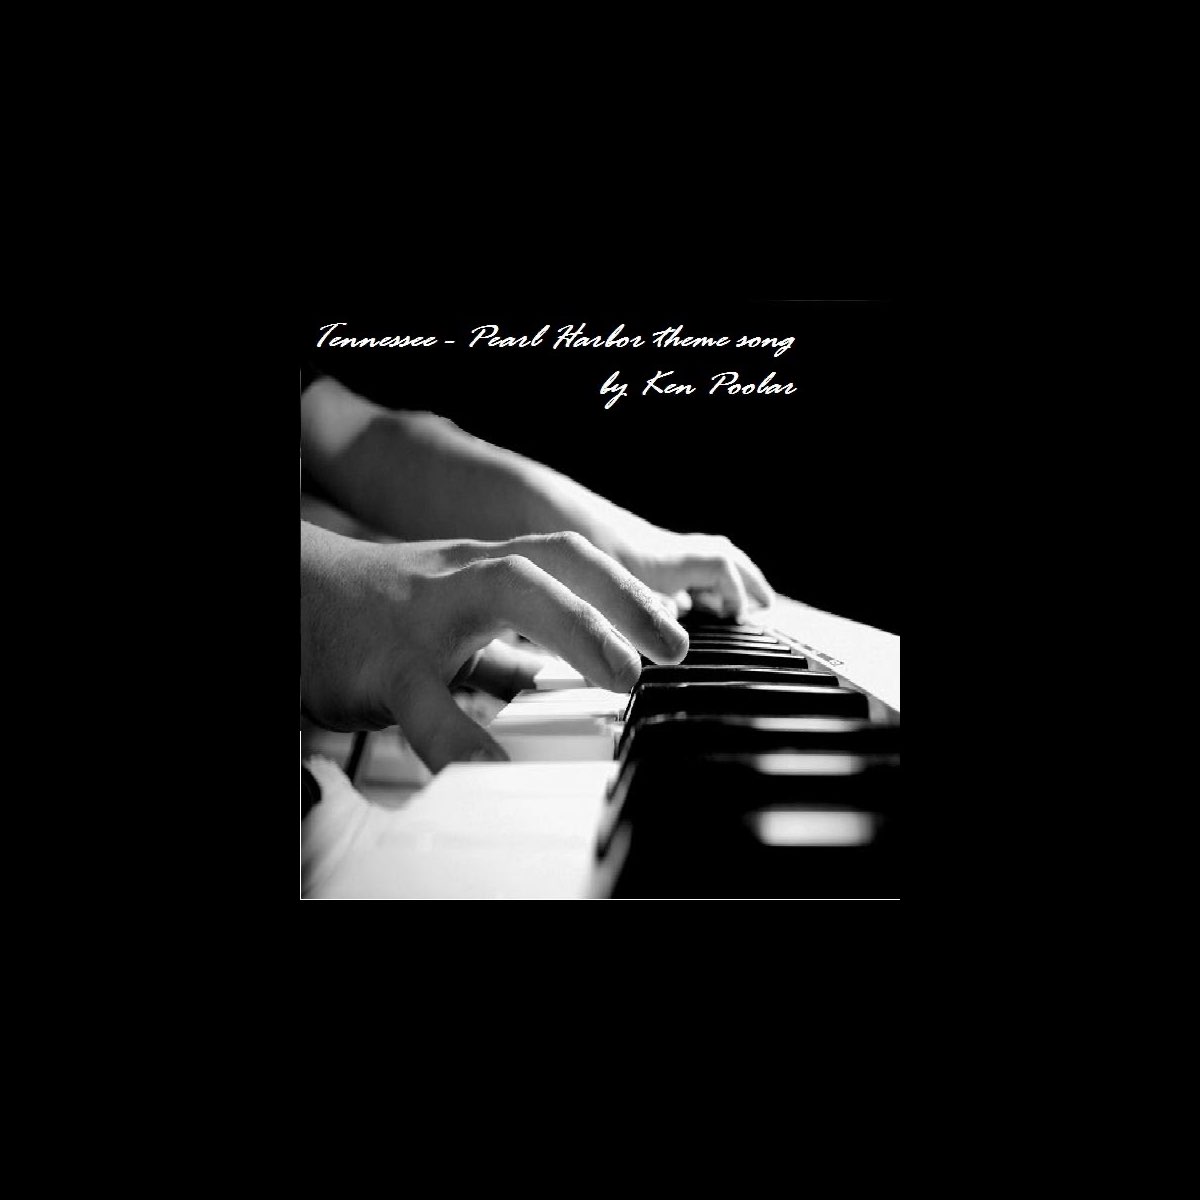 Tennessee - Pearl Harbor Theme Song on Piano - Single de Ken Poolar en  Apple Music